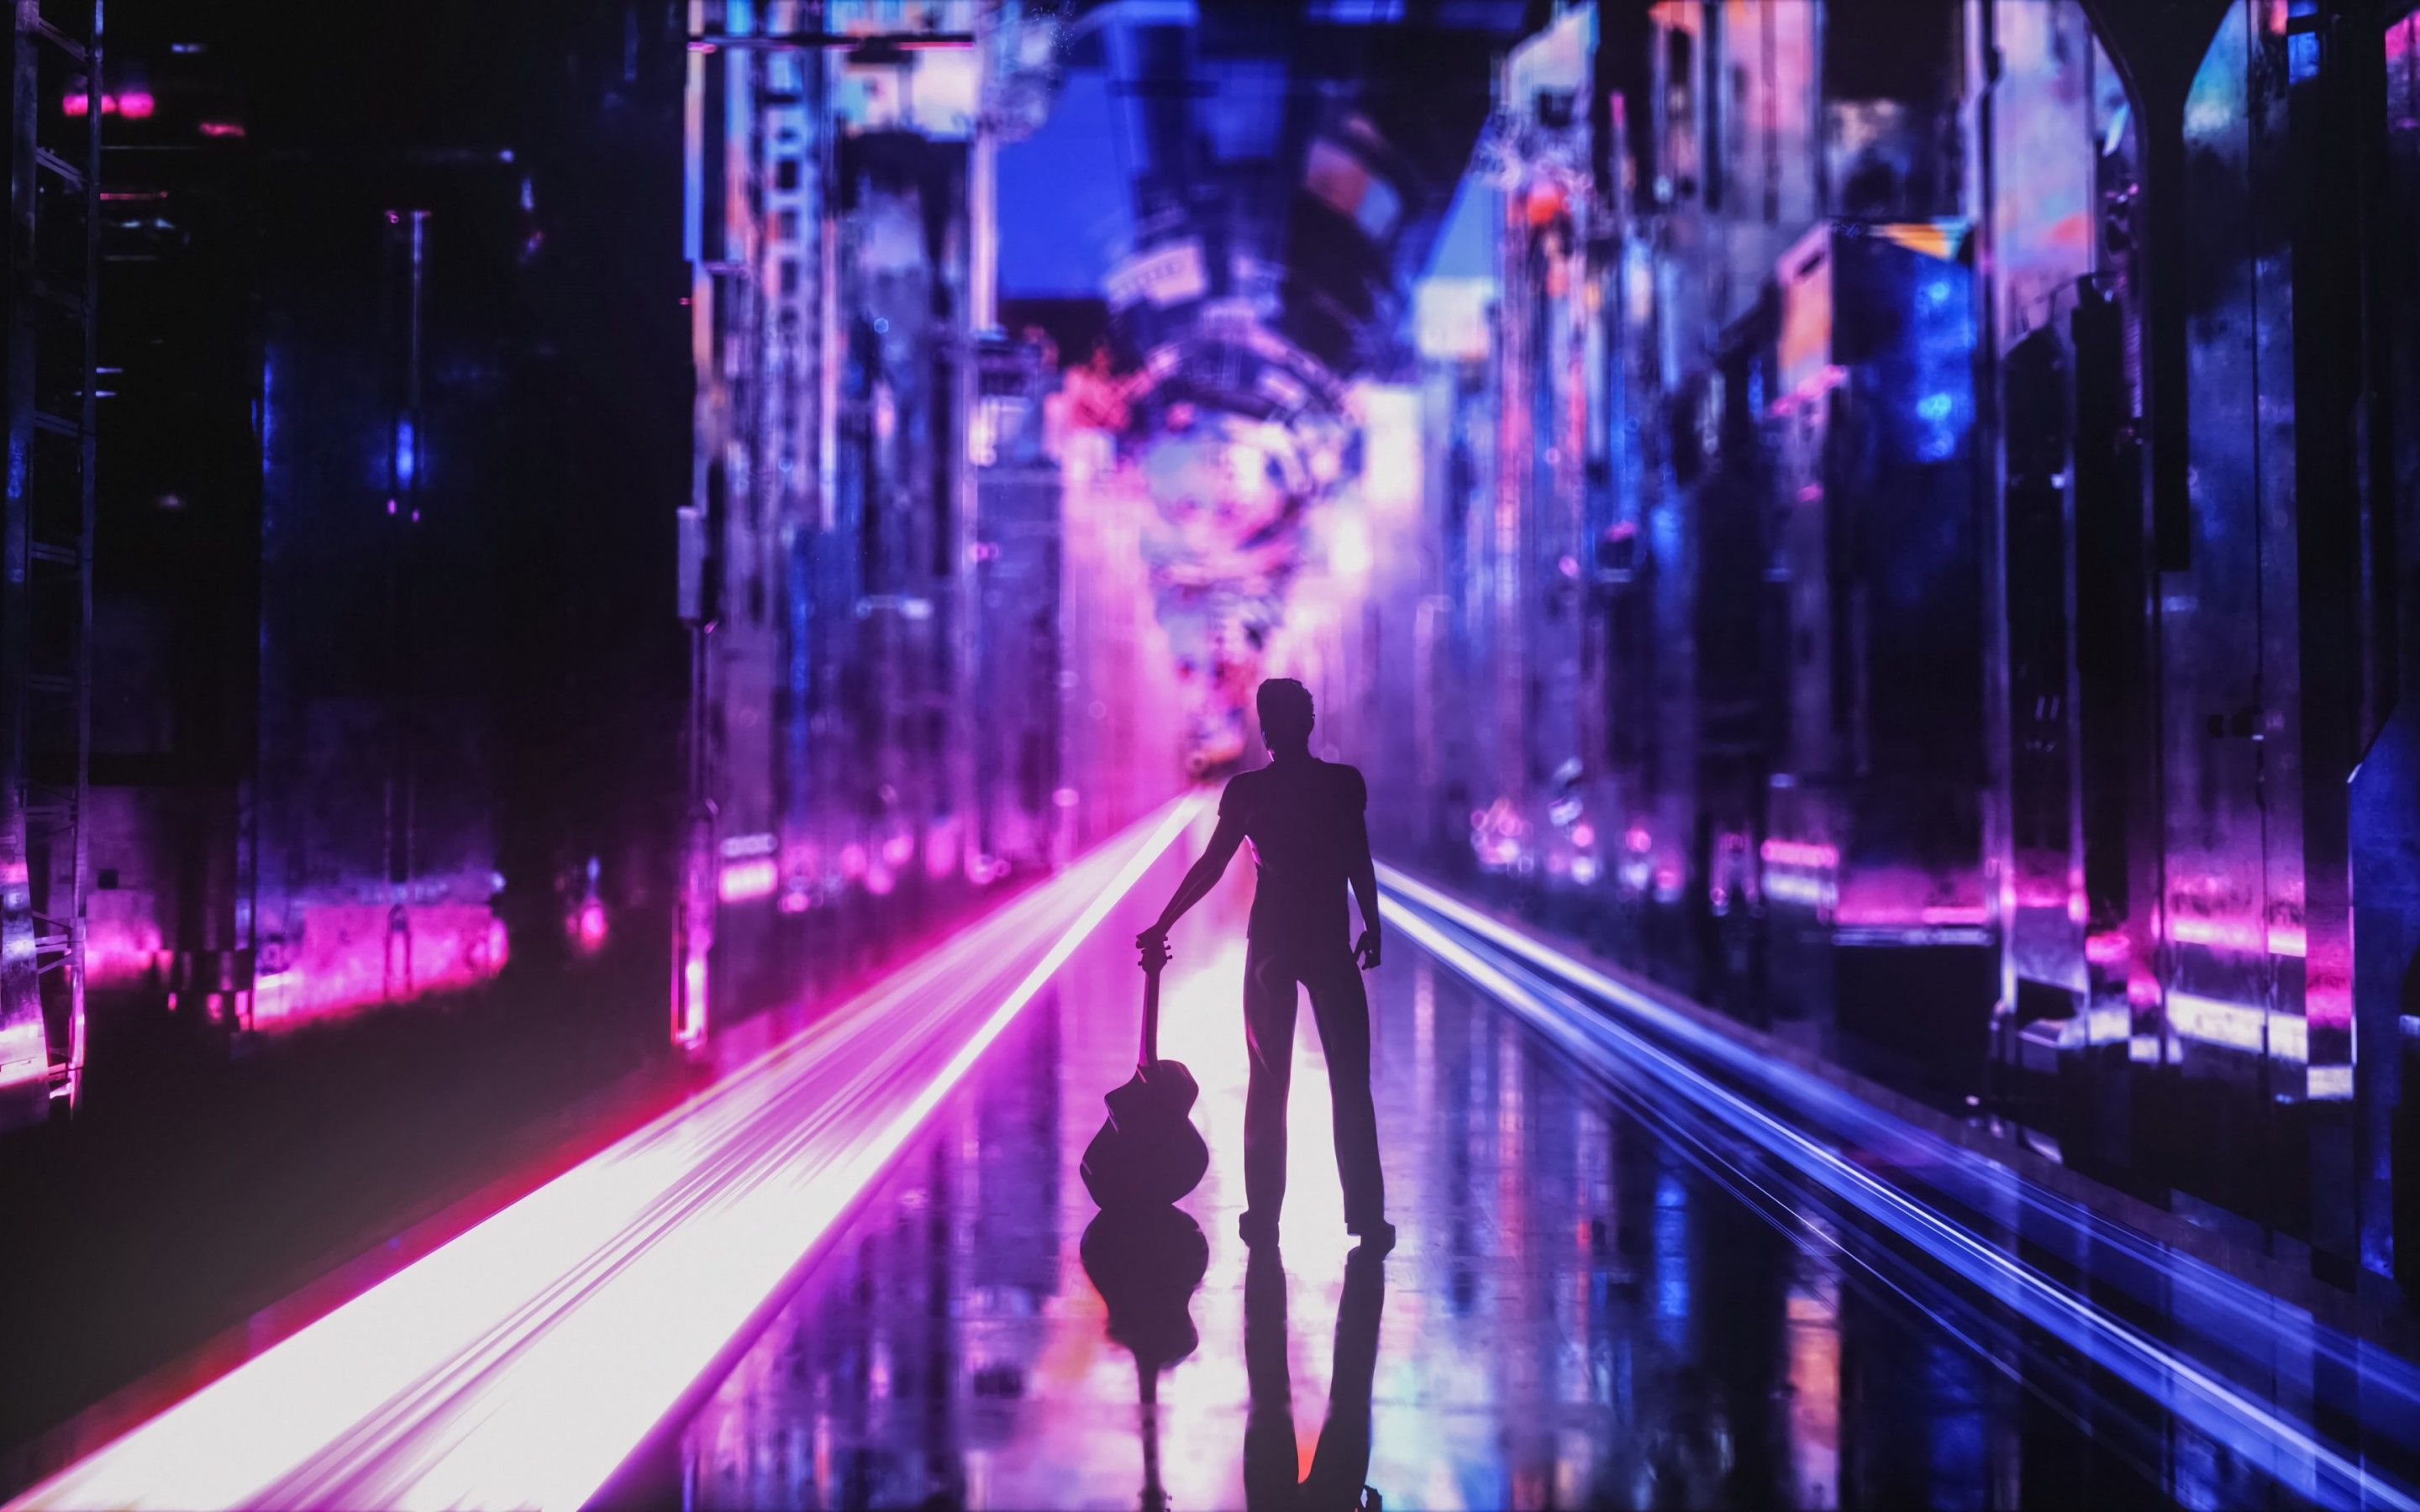 Neon 4K Wallpaper, Guitar, Musician, Silhouette, Cyberpunk, Future city, Aesthetic, Graphics CGI